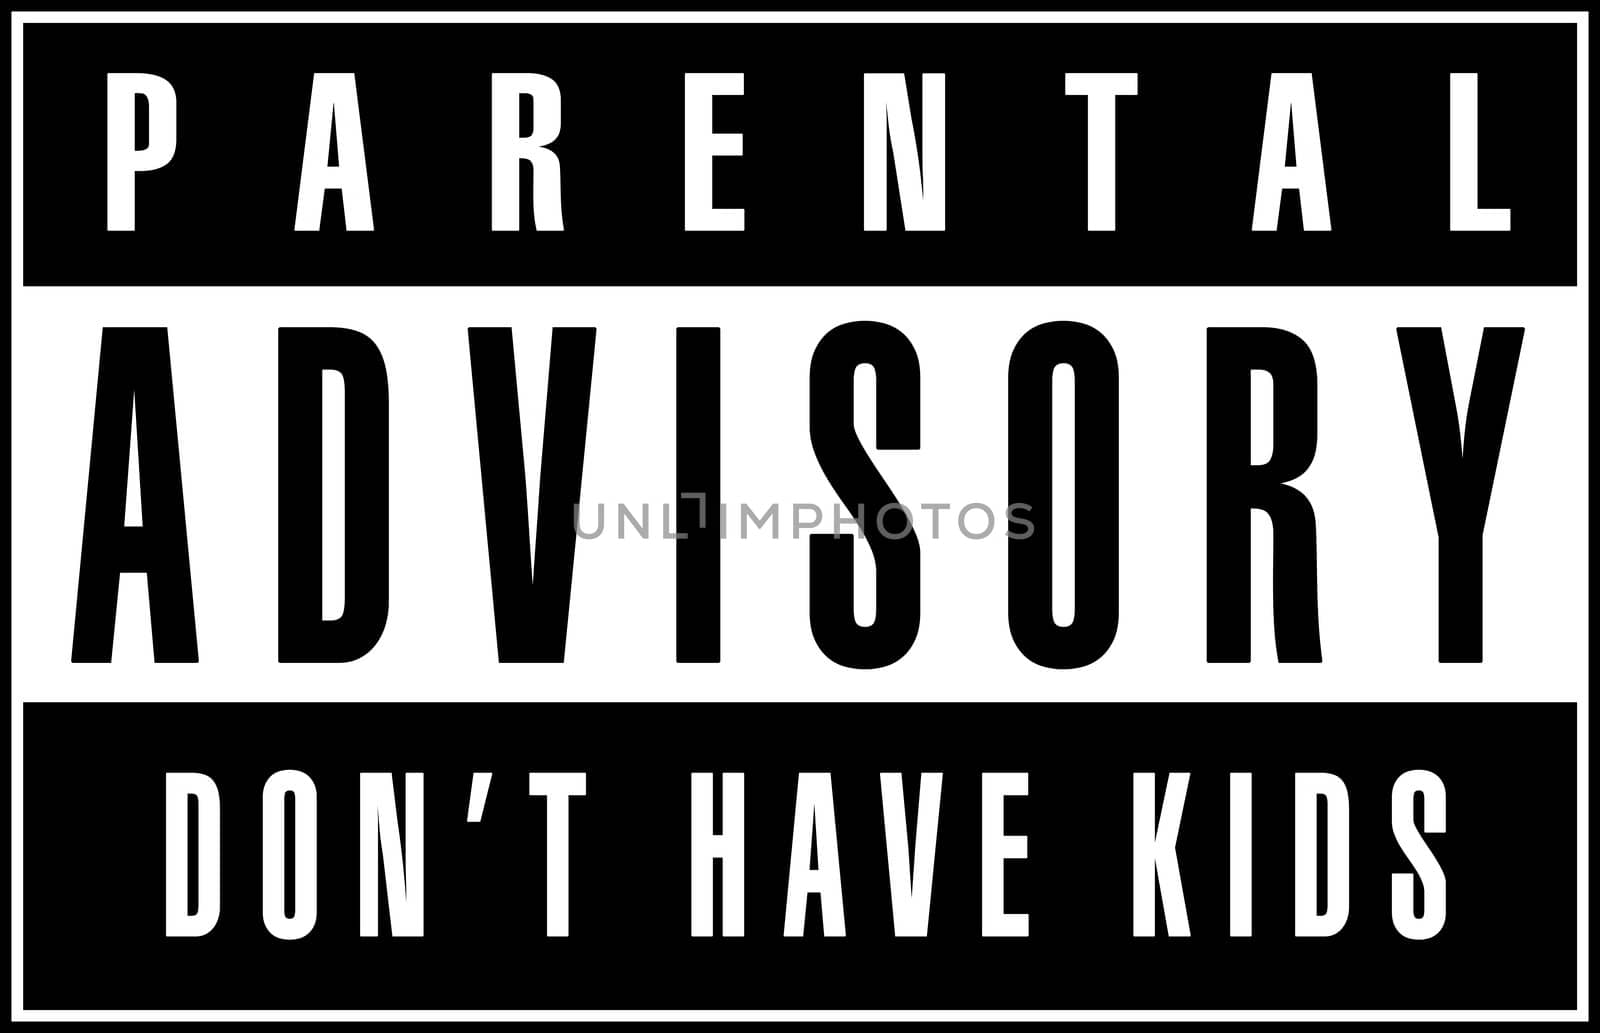 Parental advisory warning label by jeremywhat